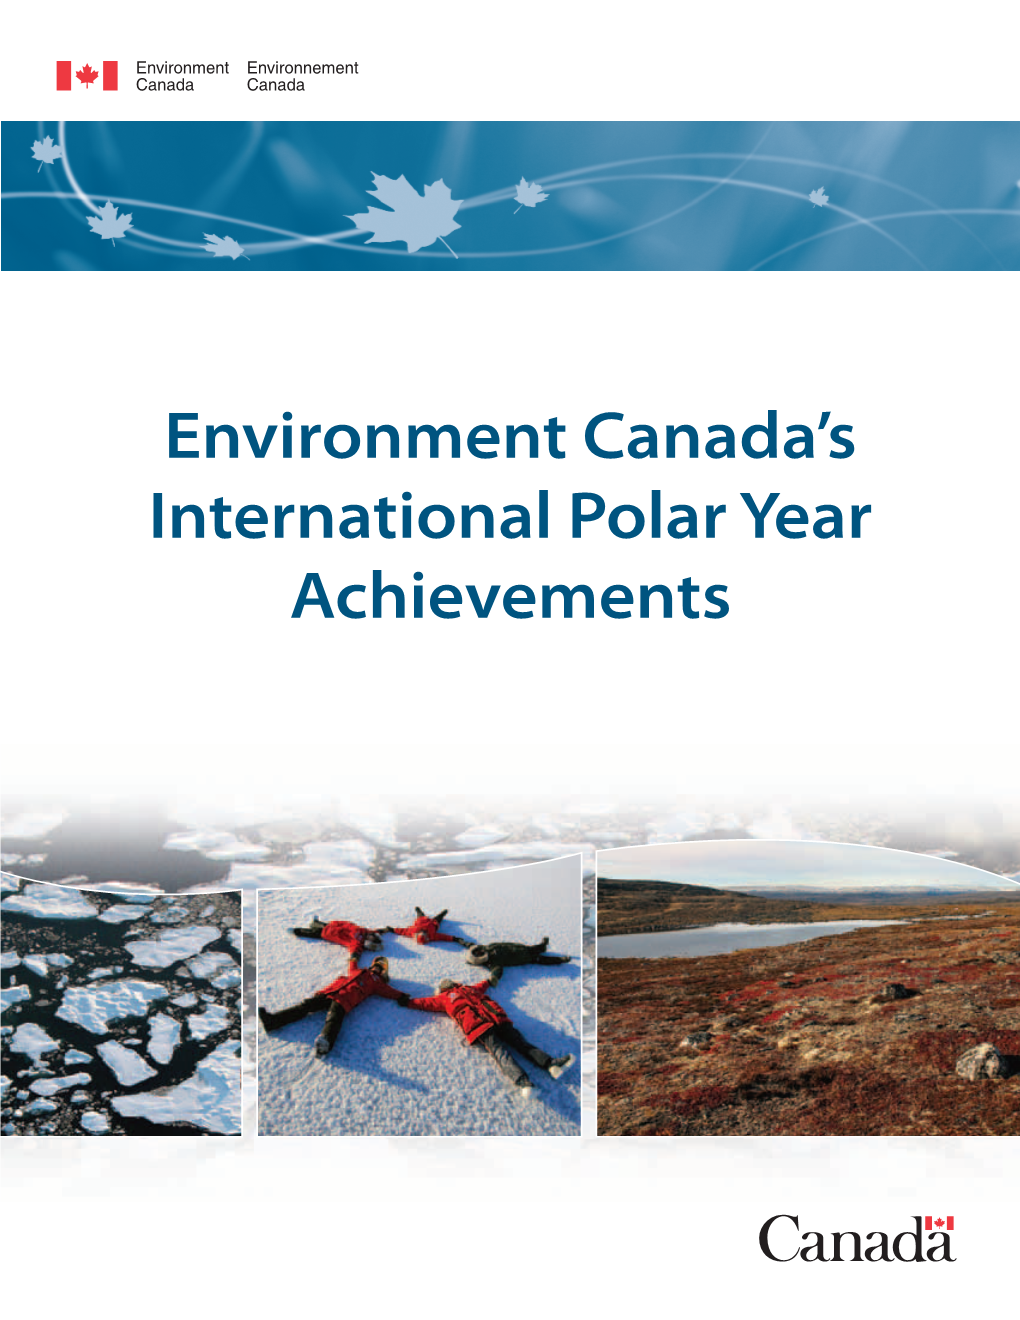 Environment Canada's International Polar Year Achievements